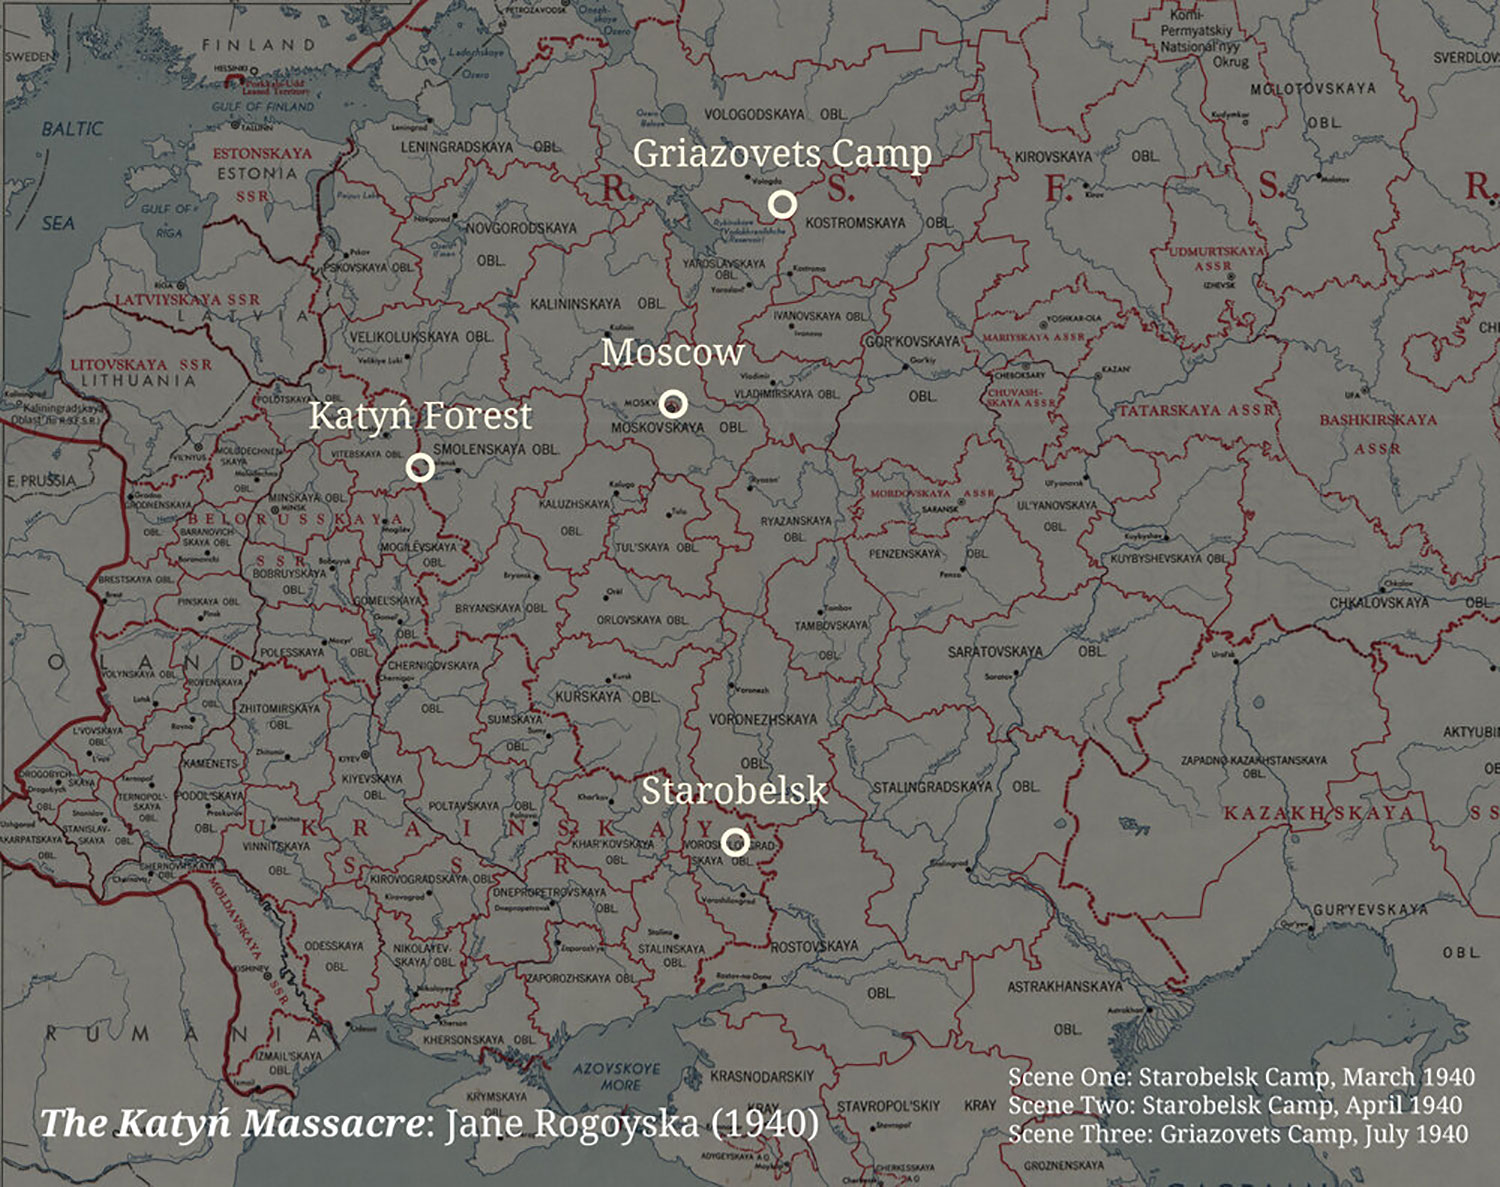 Map showing the location of the scenes in the Soviet Union, 1940, The Katyń Massacre, Jane Rogoyska